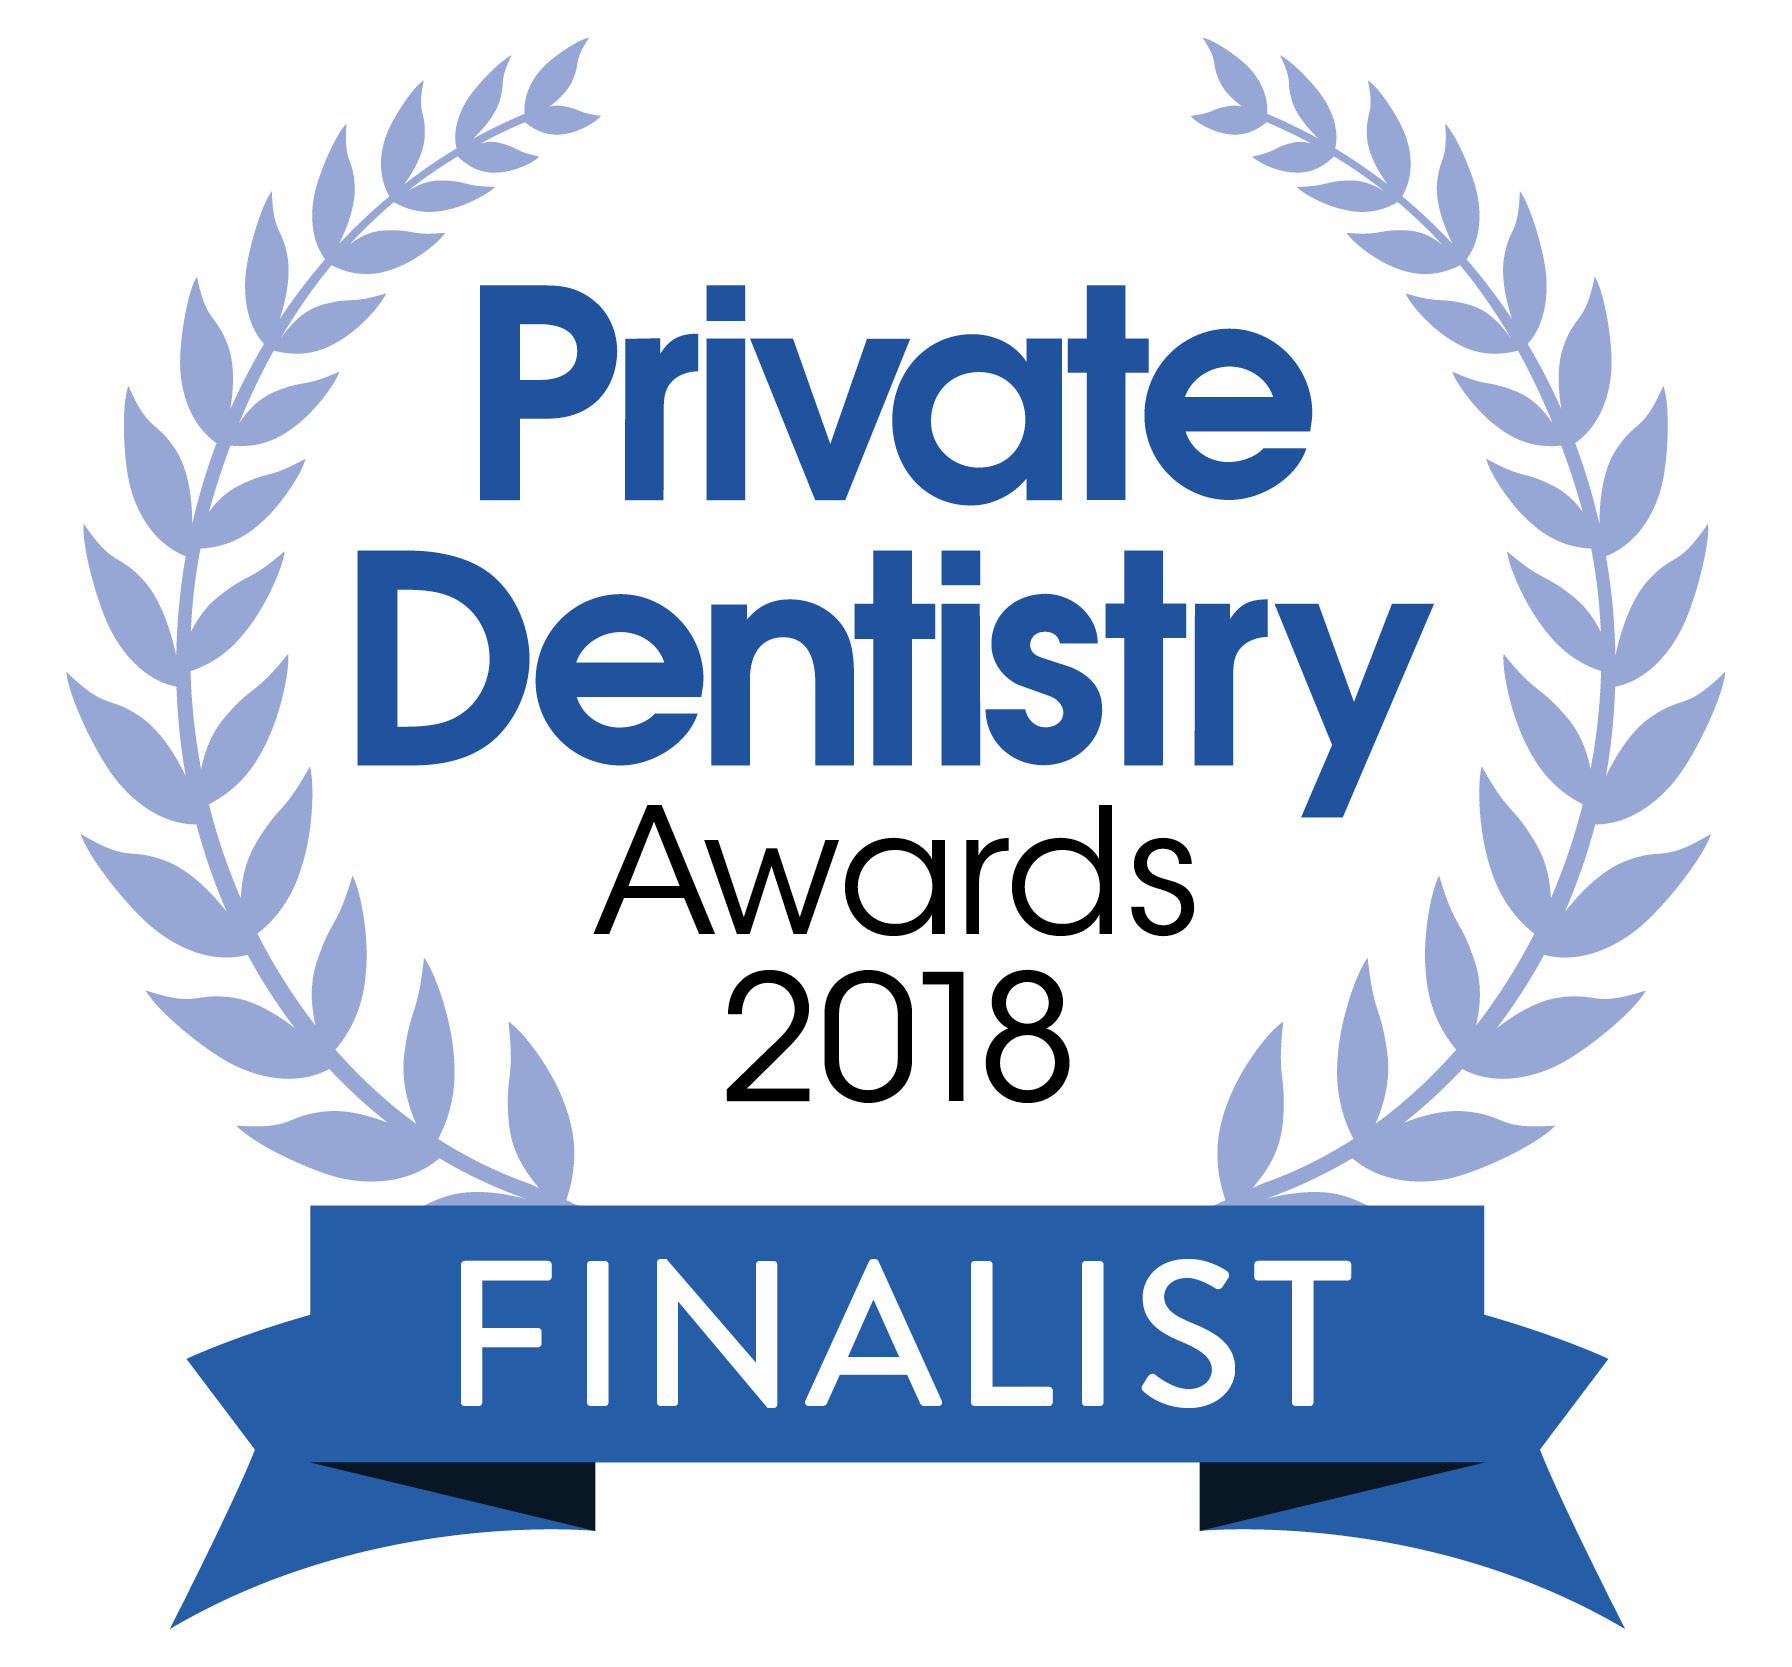 Private dentistry awards 2018